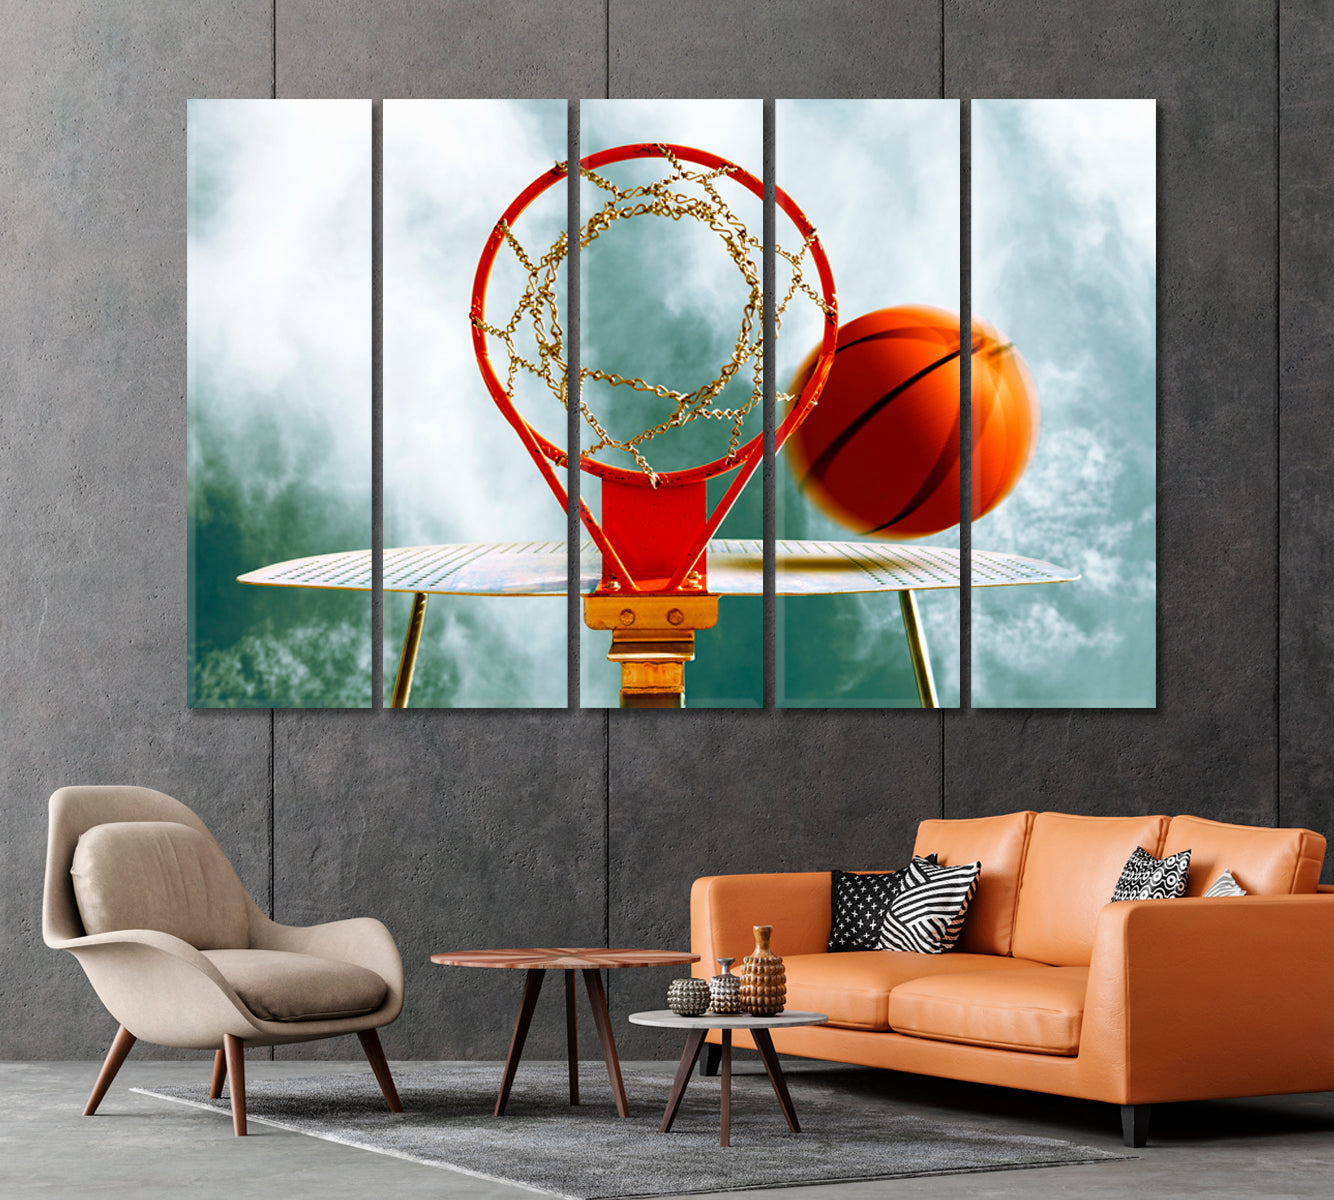 Basketball Ball Flies into a Ring Canvas Print-Canvas Print-CetArt-1 Panel-24x16 inches-CetArt